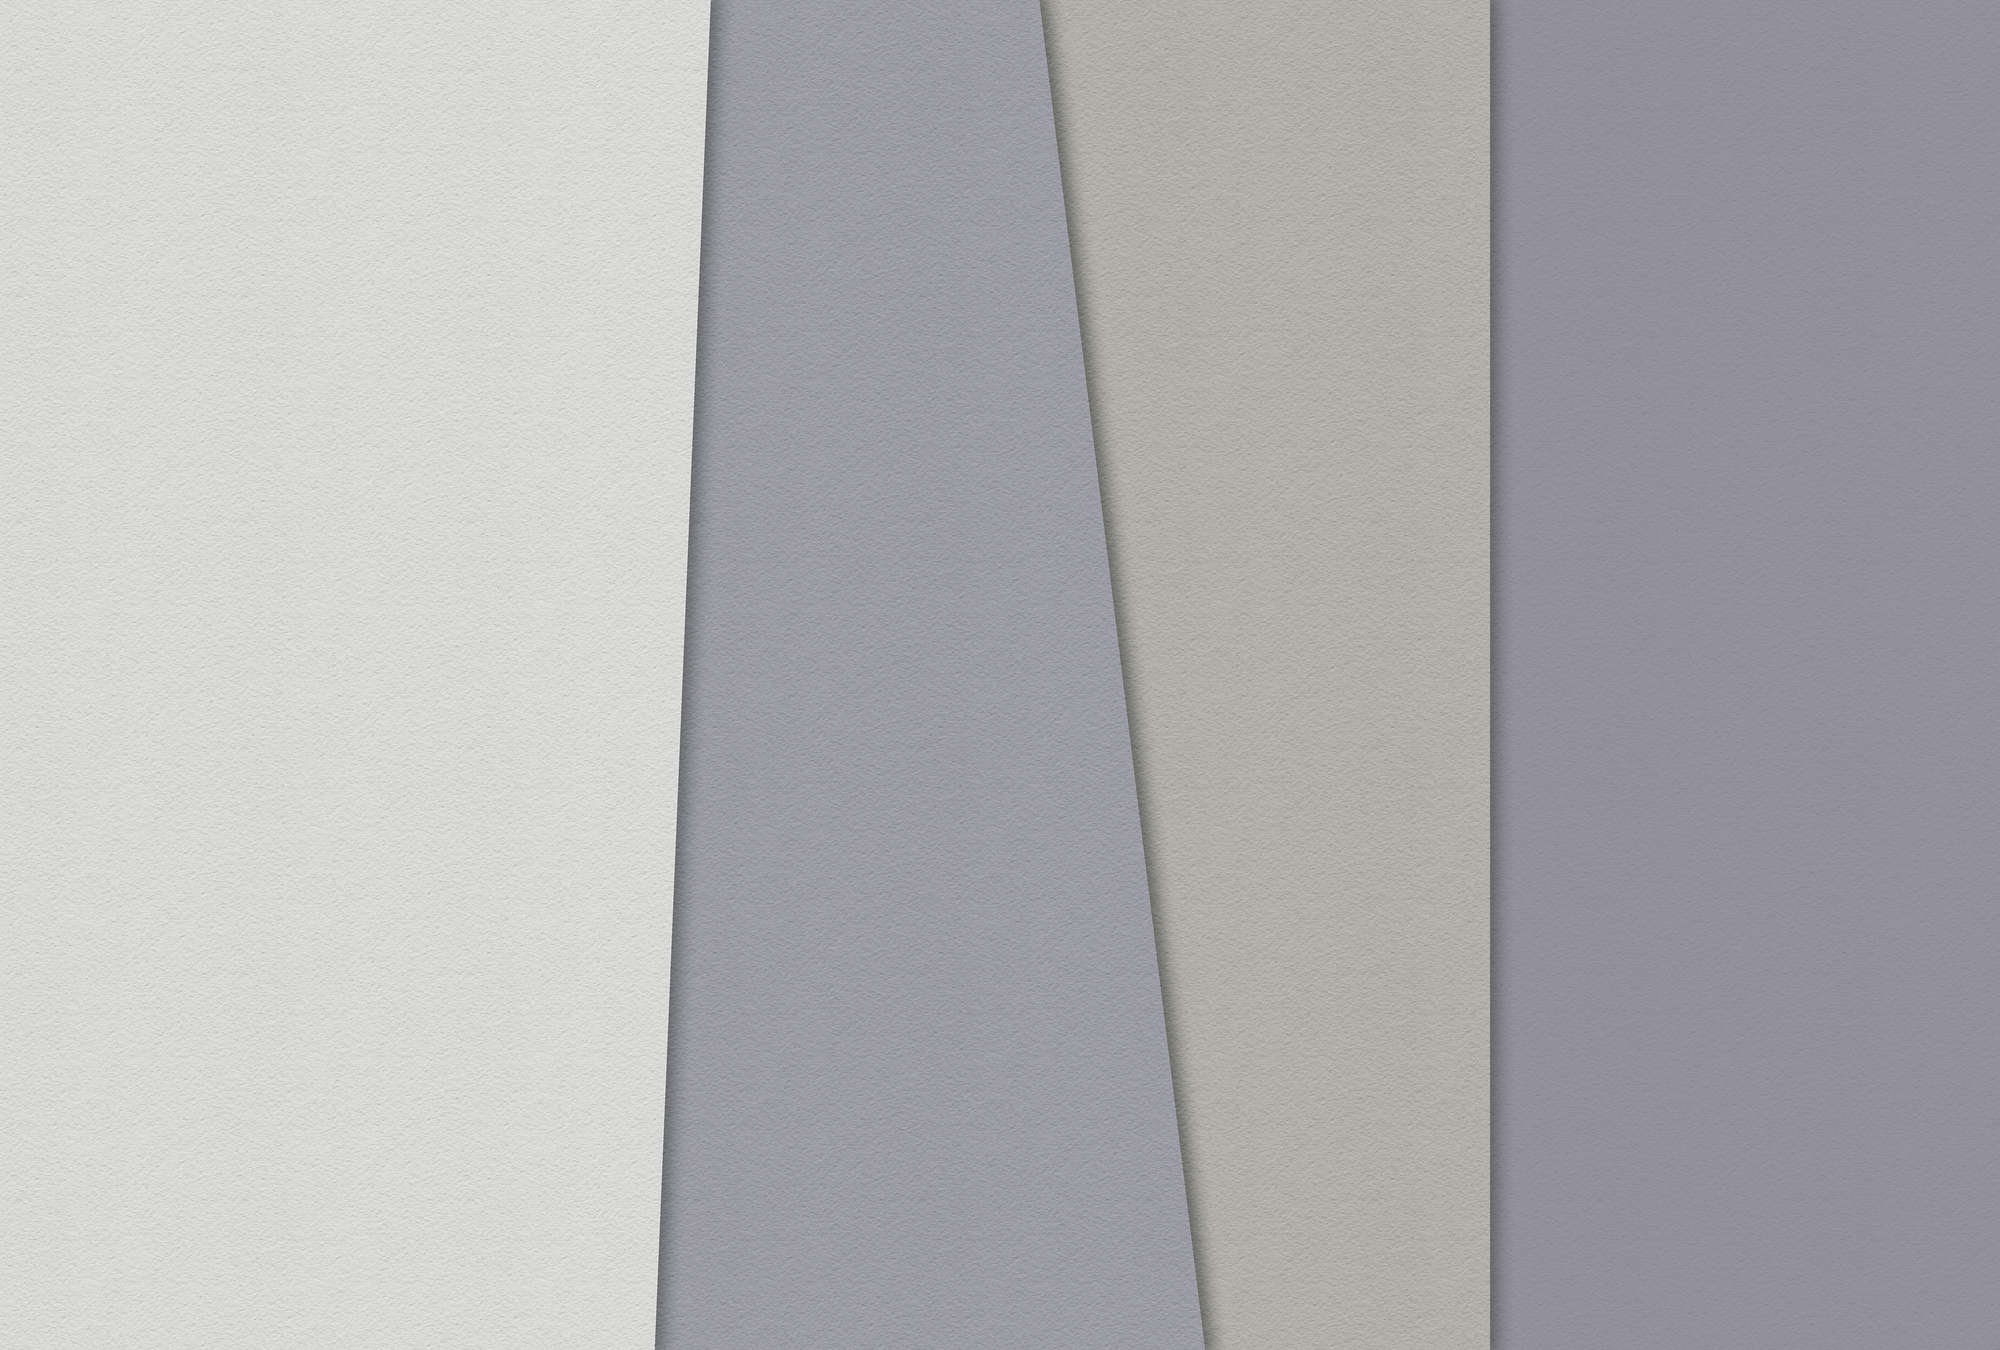             Layered paper 2 - Graphic wallpaper, handmade paper structure minimalist design - cream, green | structure non-woven
        